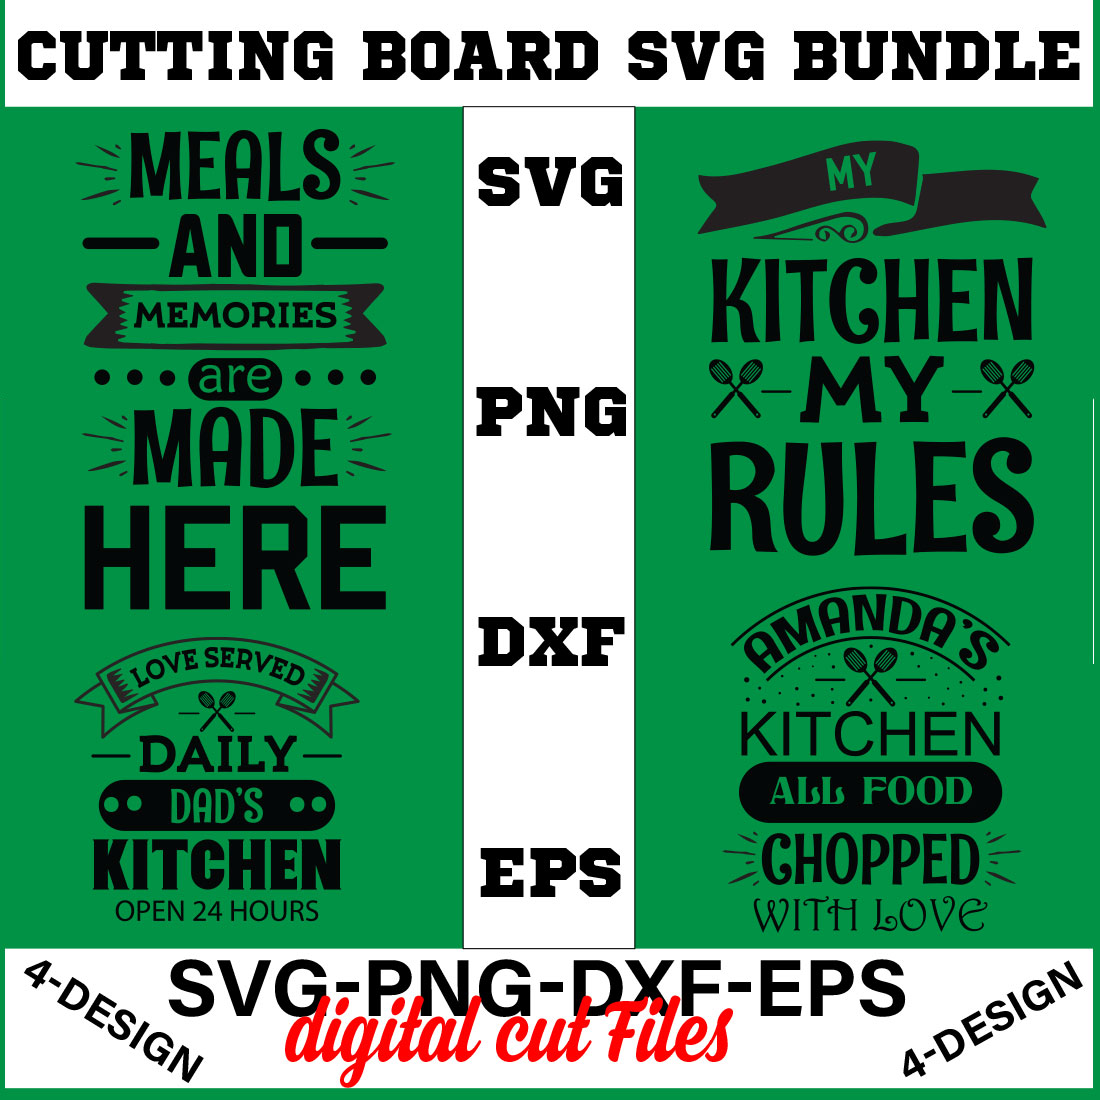 Cutting Board svg T-shirt Design Bundle Volume-03 cover image.